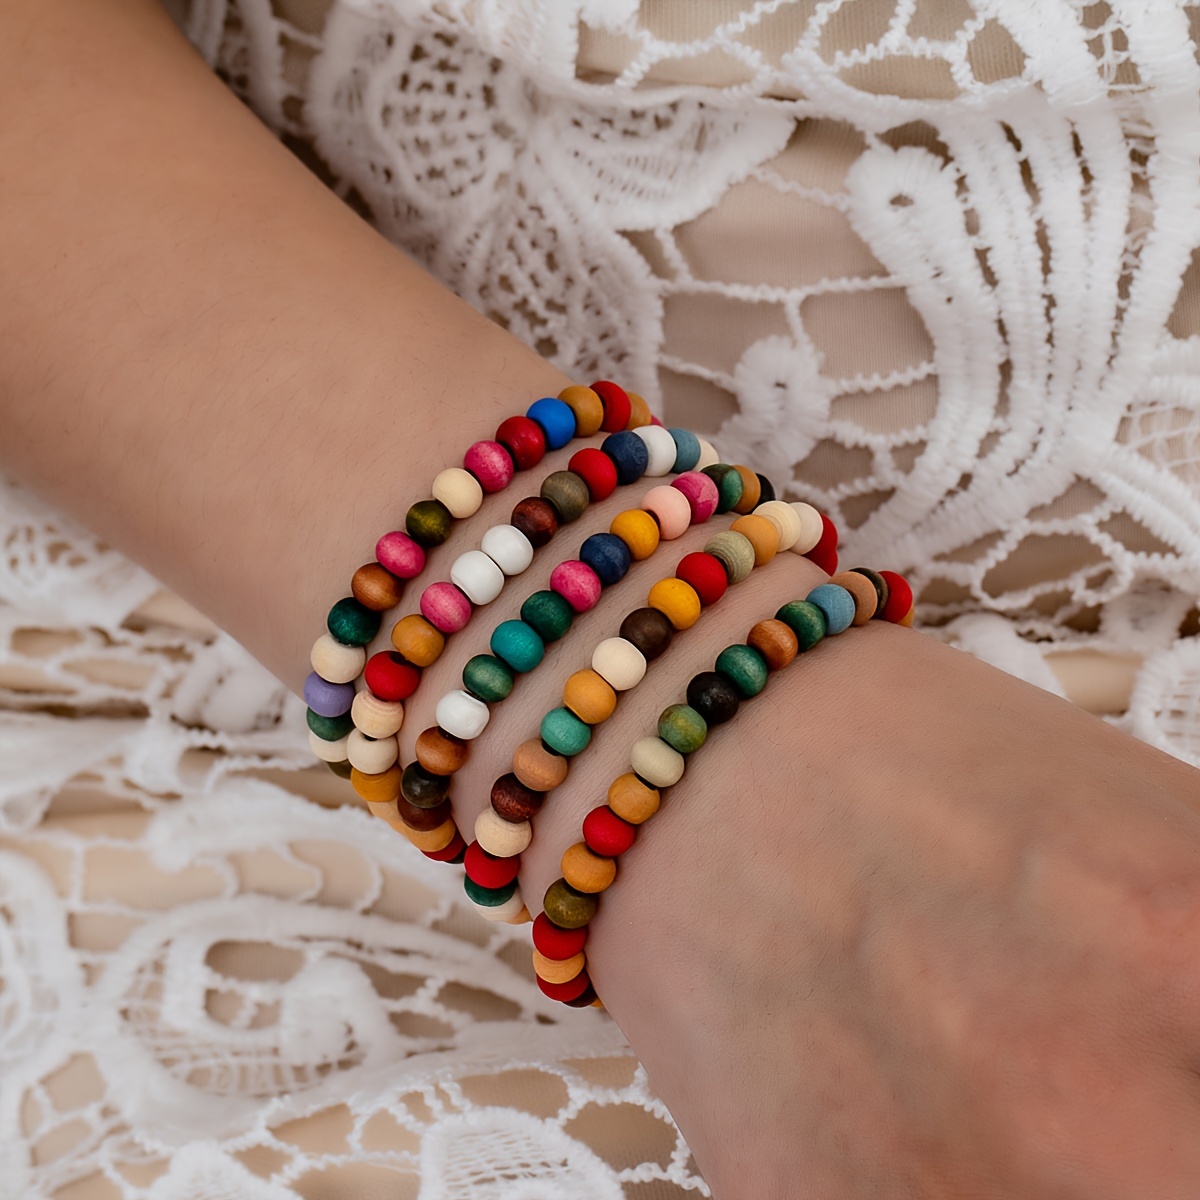 

Boho-chic 5-piece Wooden Beaded Bracelet Set - Colorful, Vintage & Minimalist Style For Everyday Wear